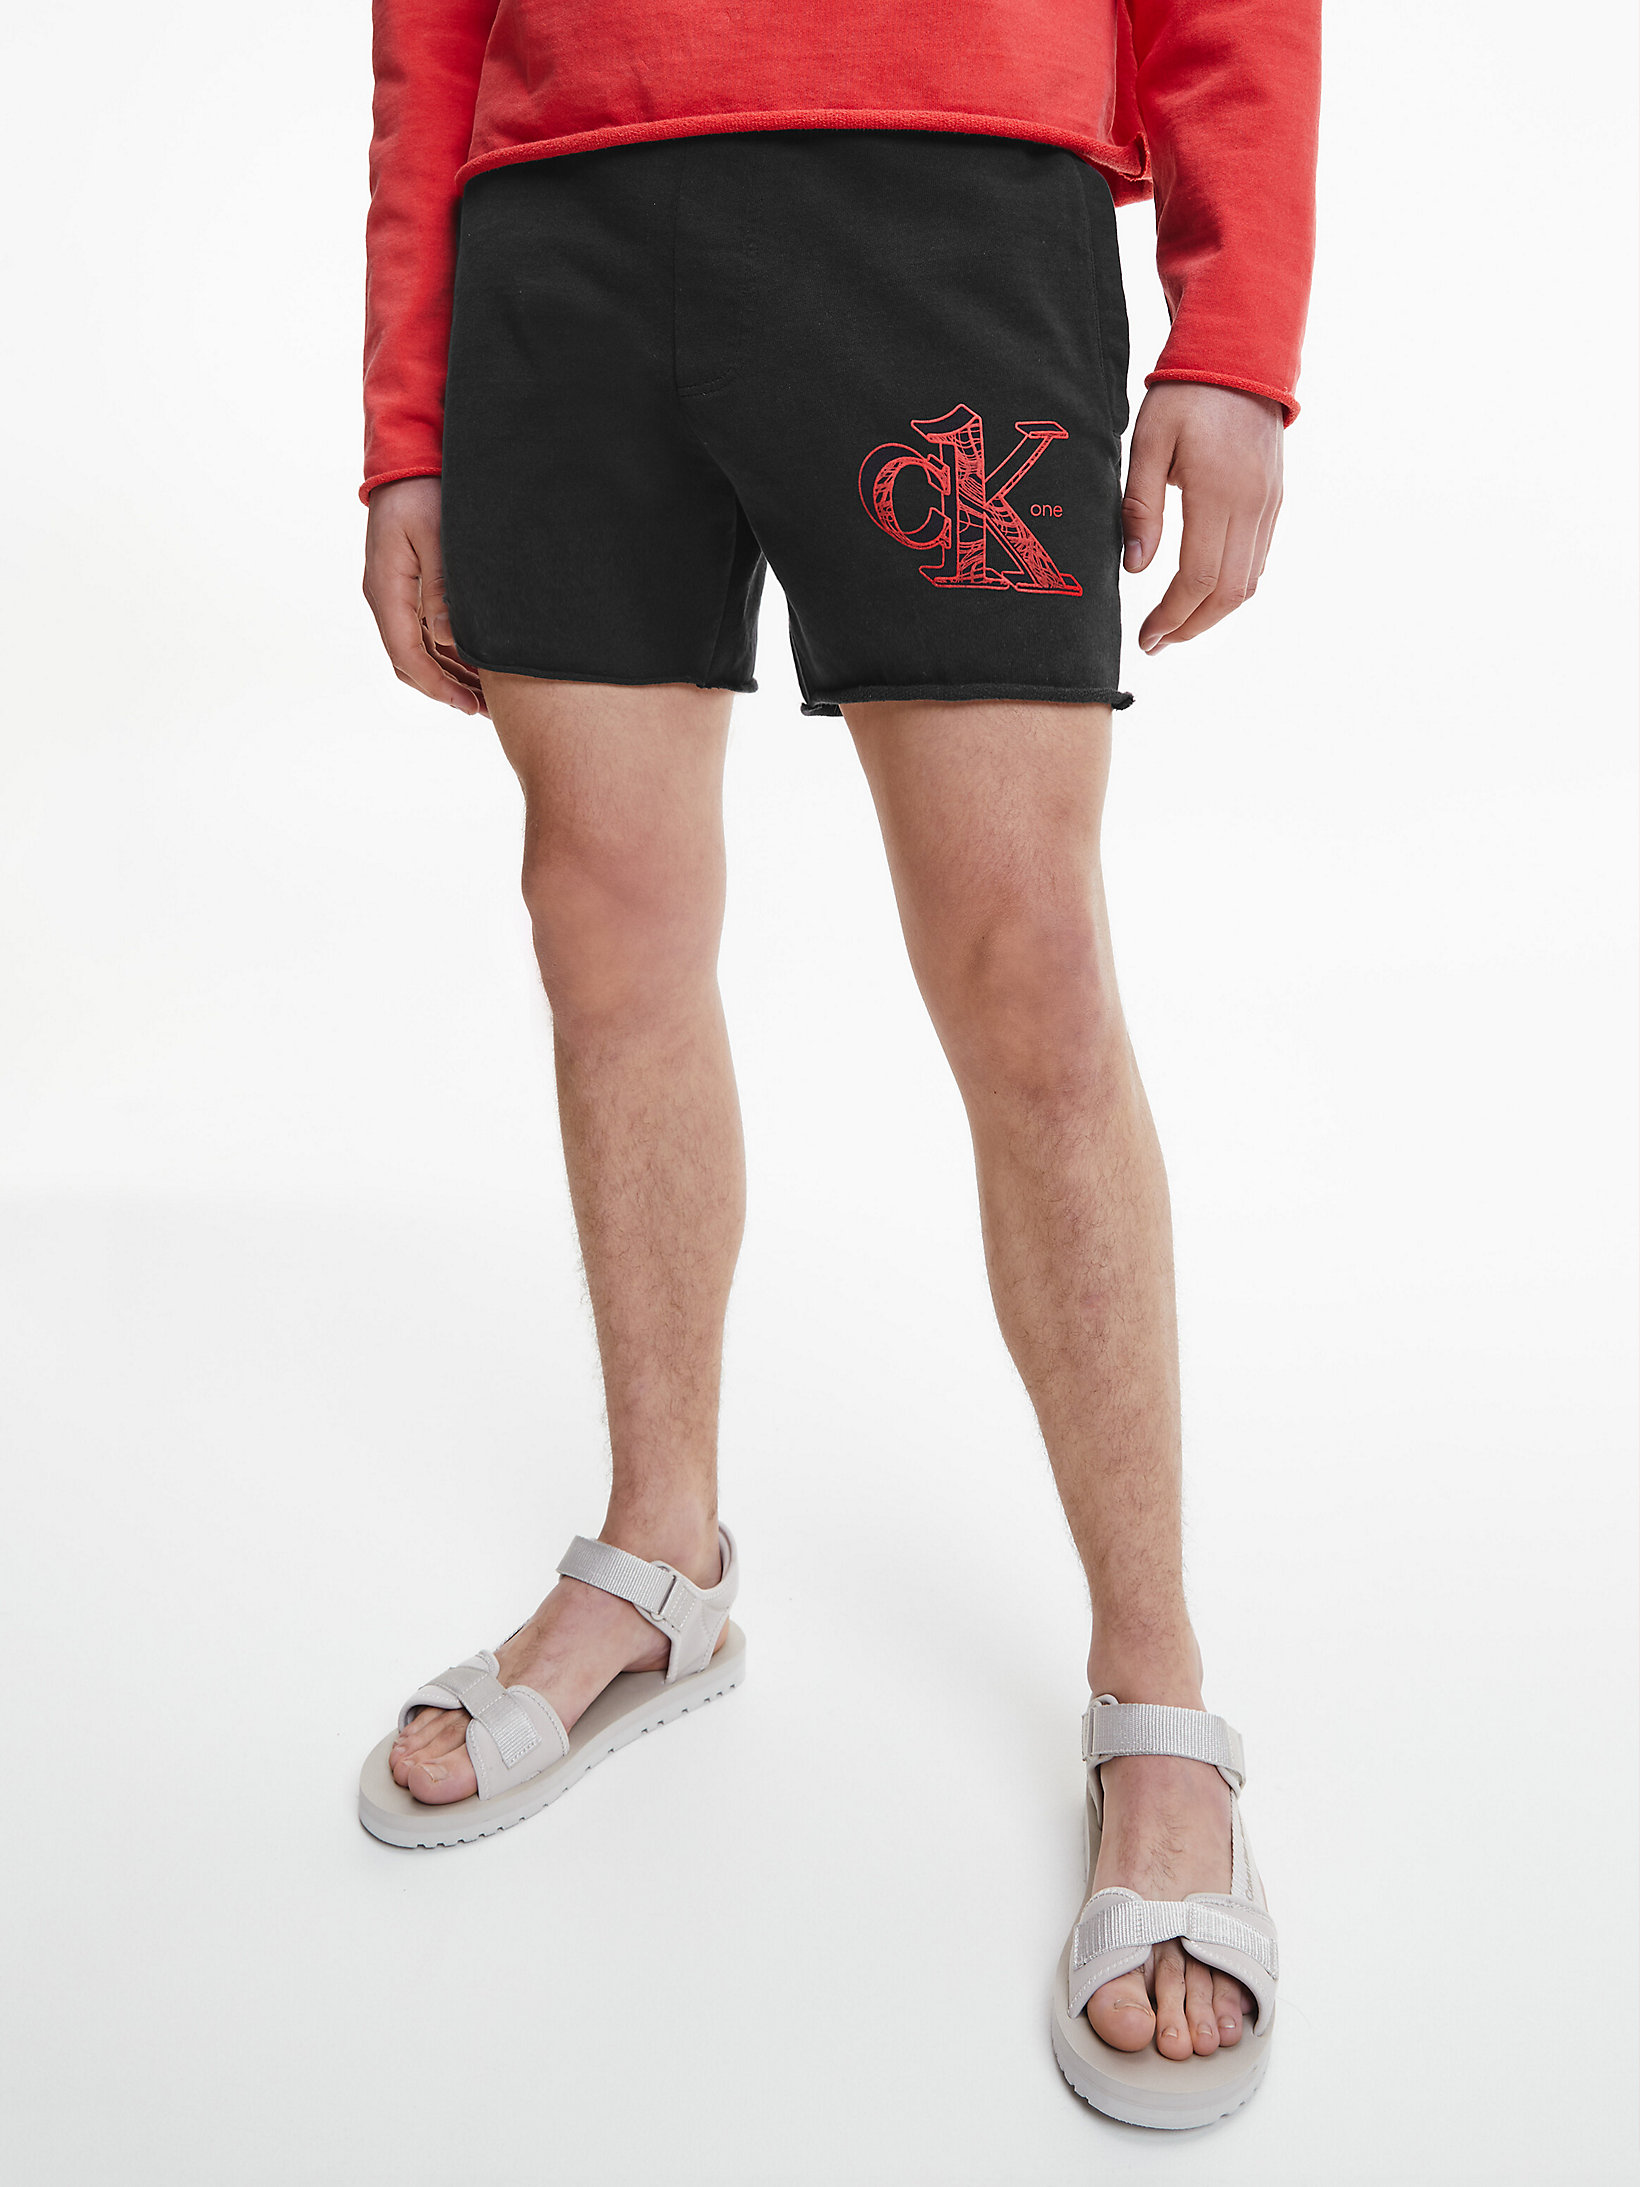 CK Black Unisex Recycled Cotton Shorts - CK One undefined unisex Calvin Klein